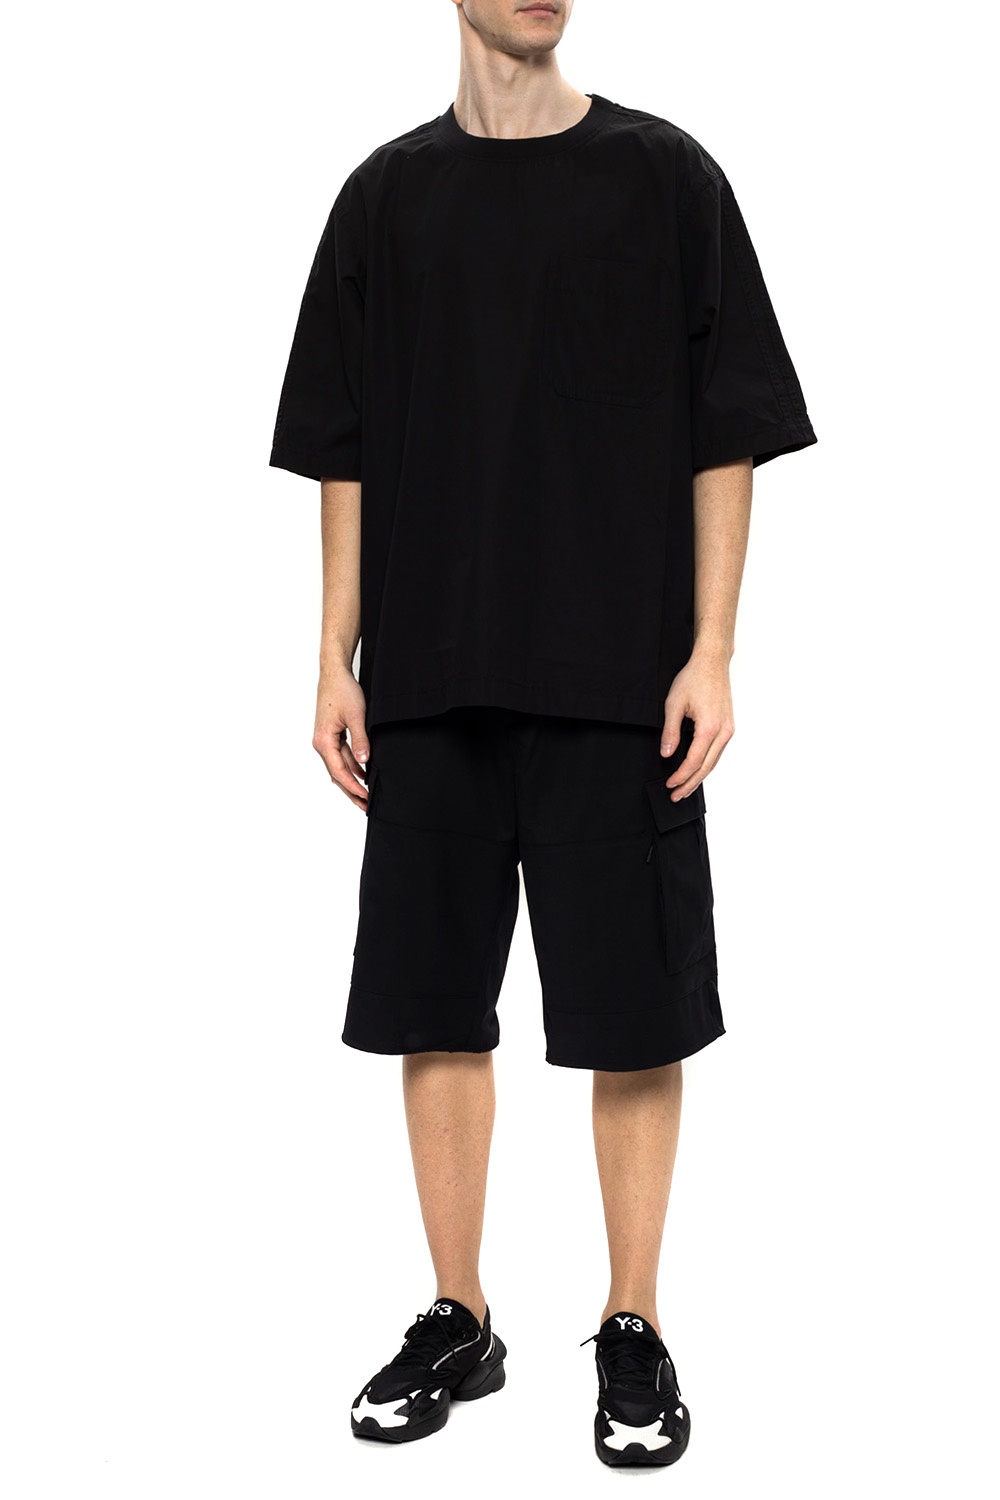 3 Yohji Yamamoto Asymmetrical T - Joma Winner Kurzärmeliges T-shirt, Y